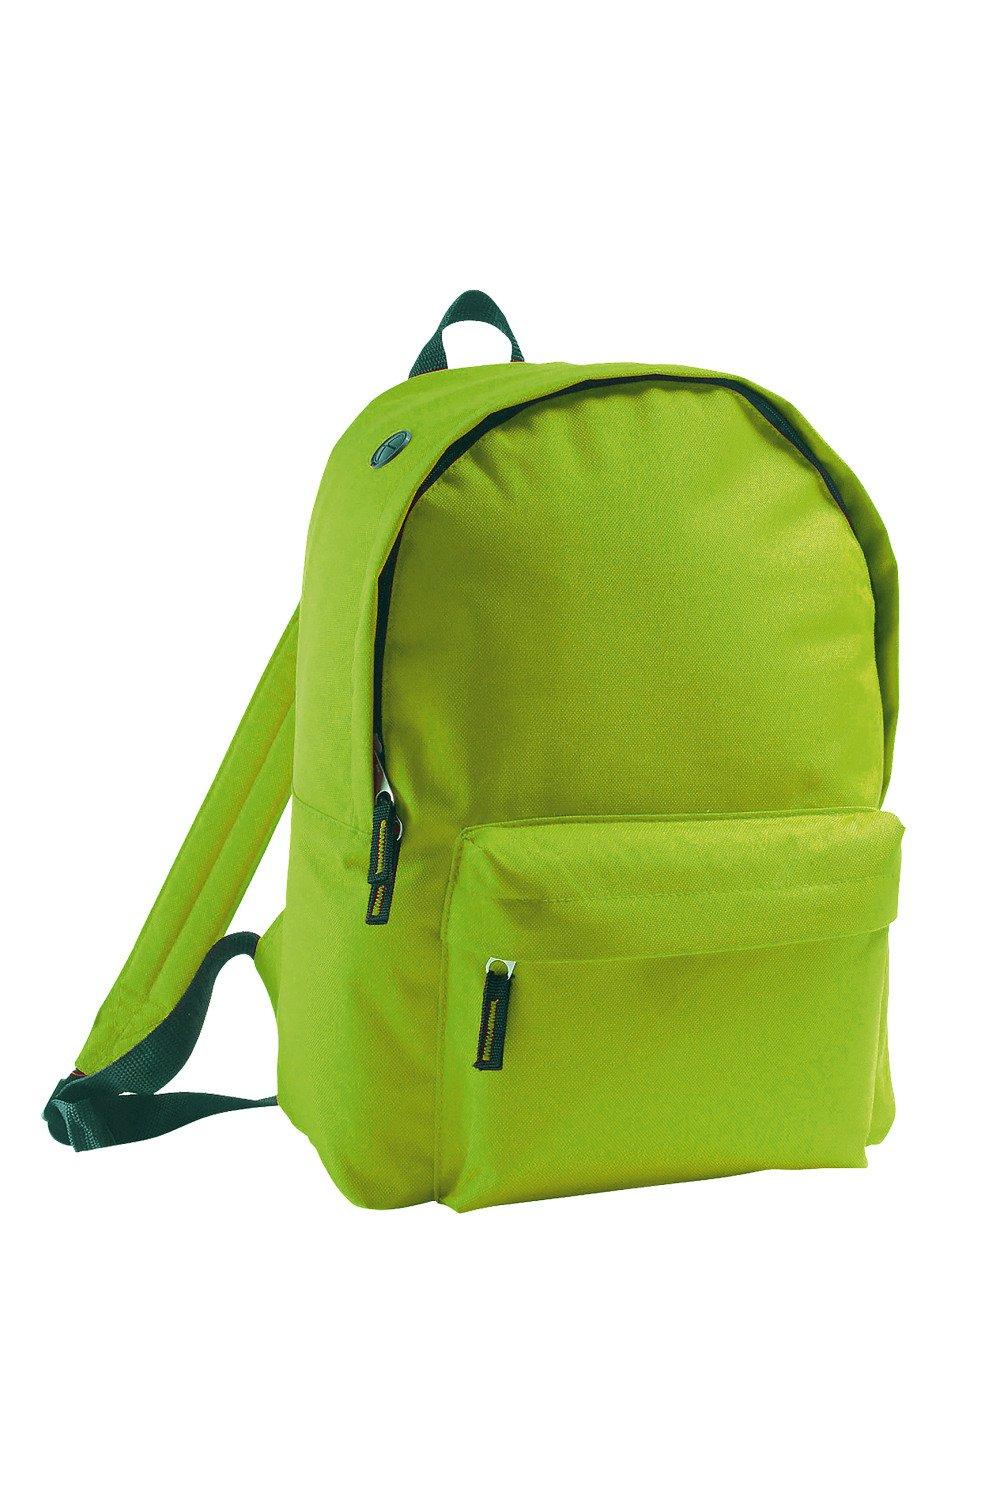 Рюкзак / сумка-рюкзак Rider SOL'S, зеленый рюкзак rider оранжевый